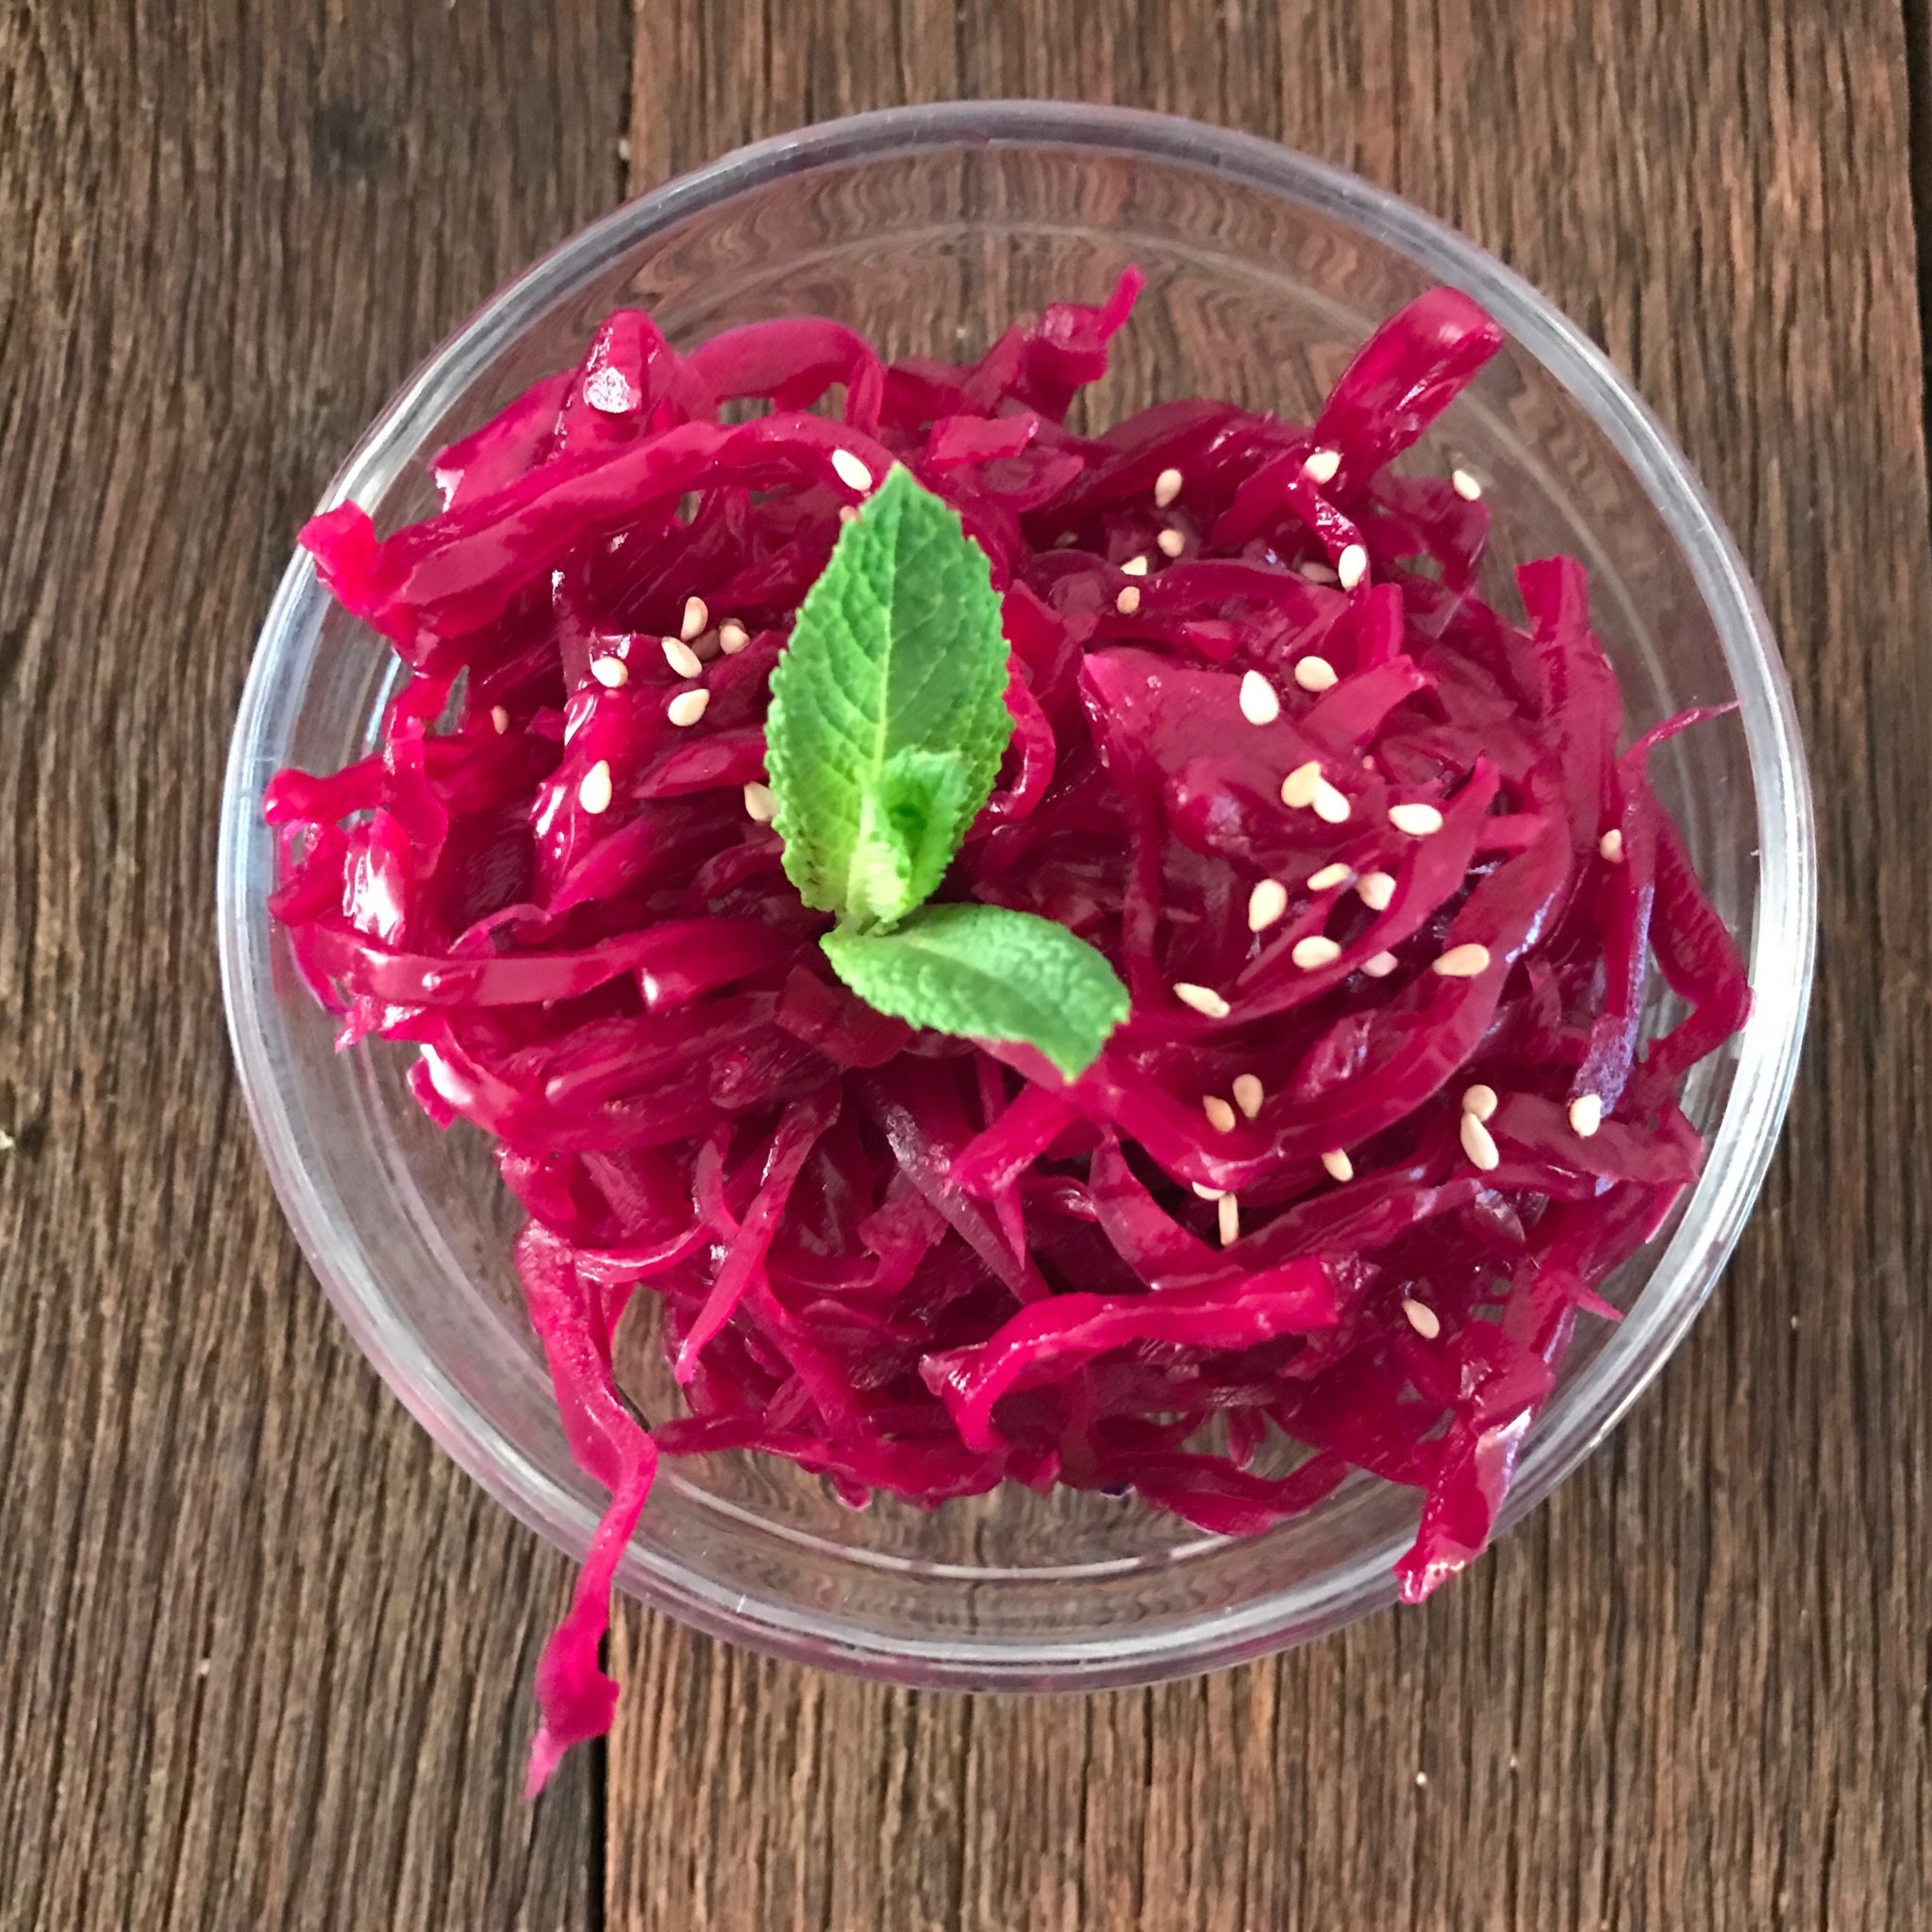 Red Cabbage Sauerkraut: Homemade probiotic from your own kitchen!